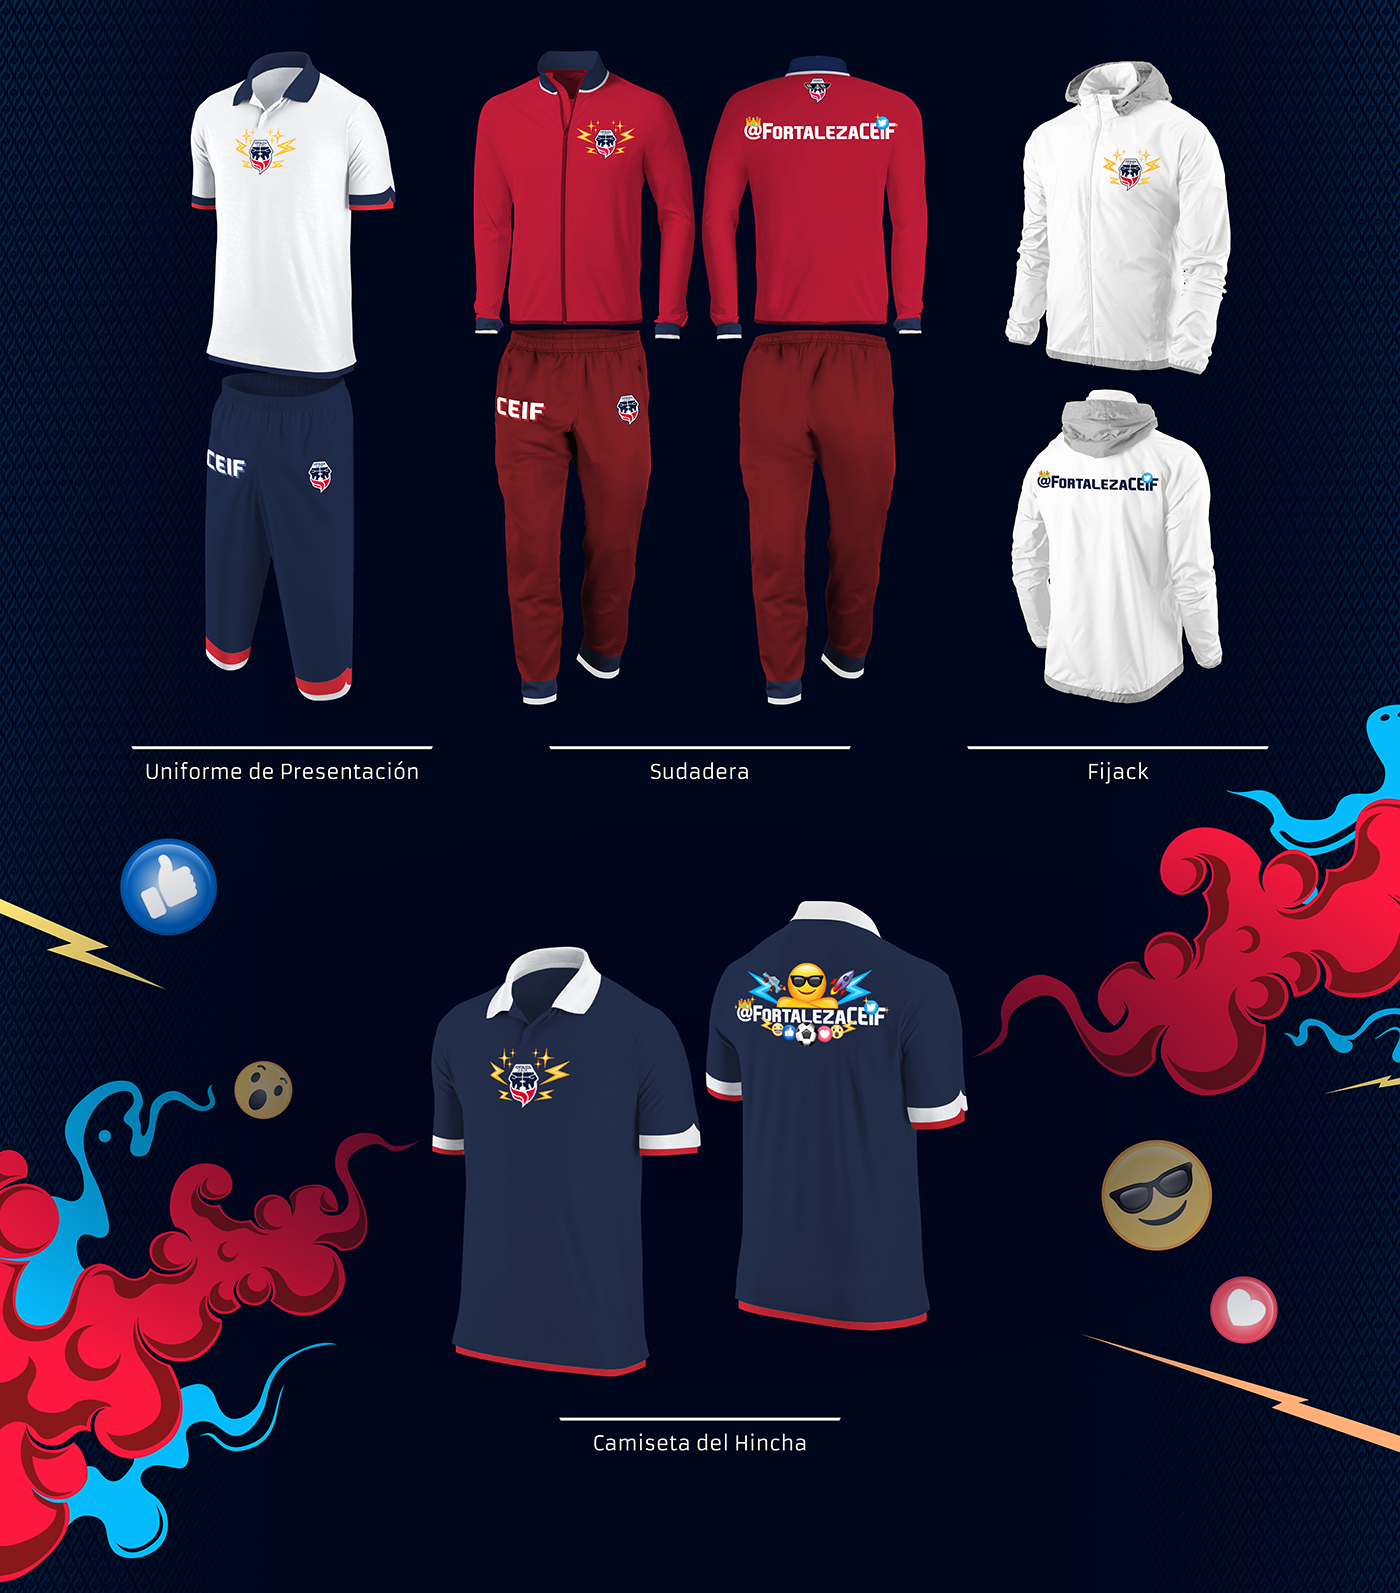 jersey kit uniform camiseta Futbol soccer football team fortaleza Emoji